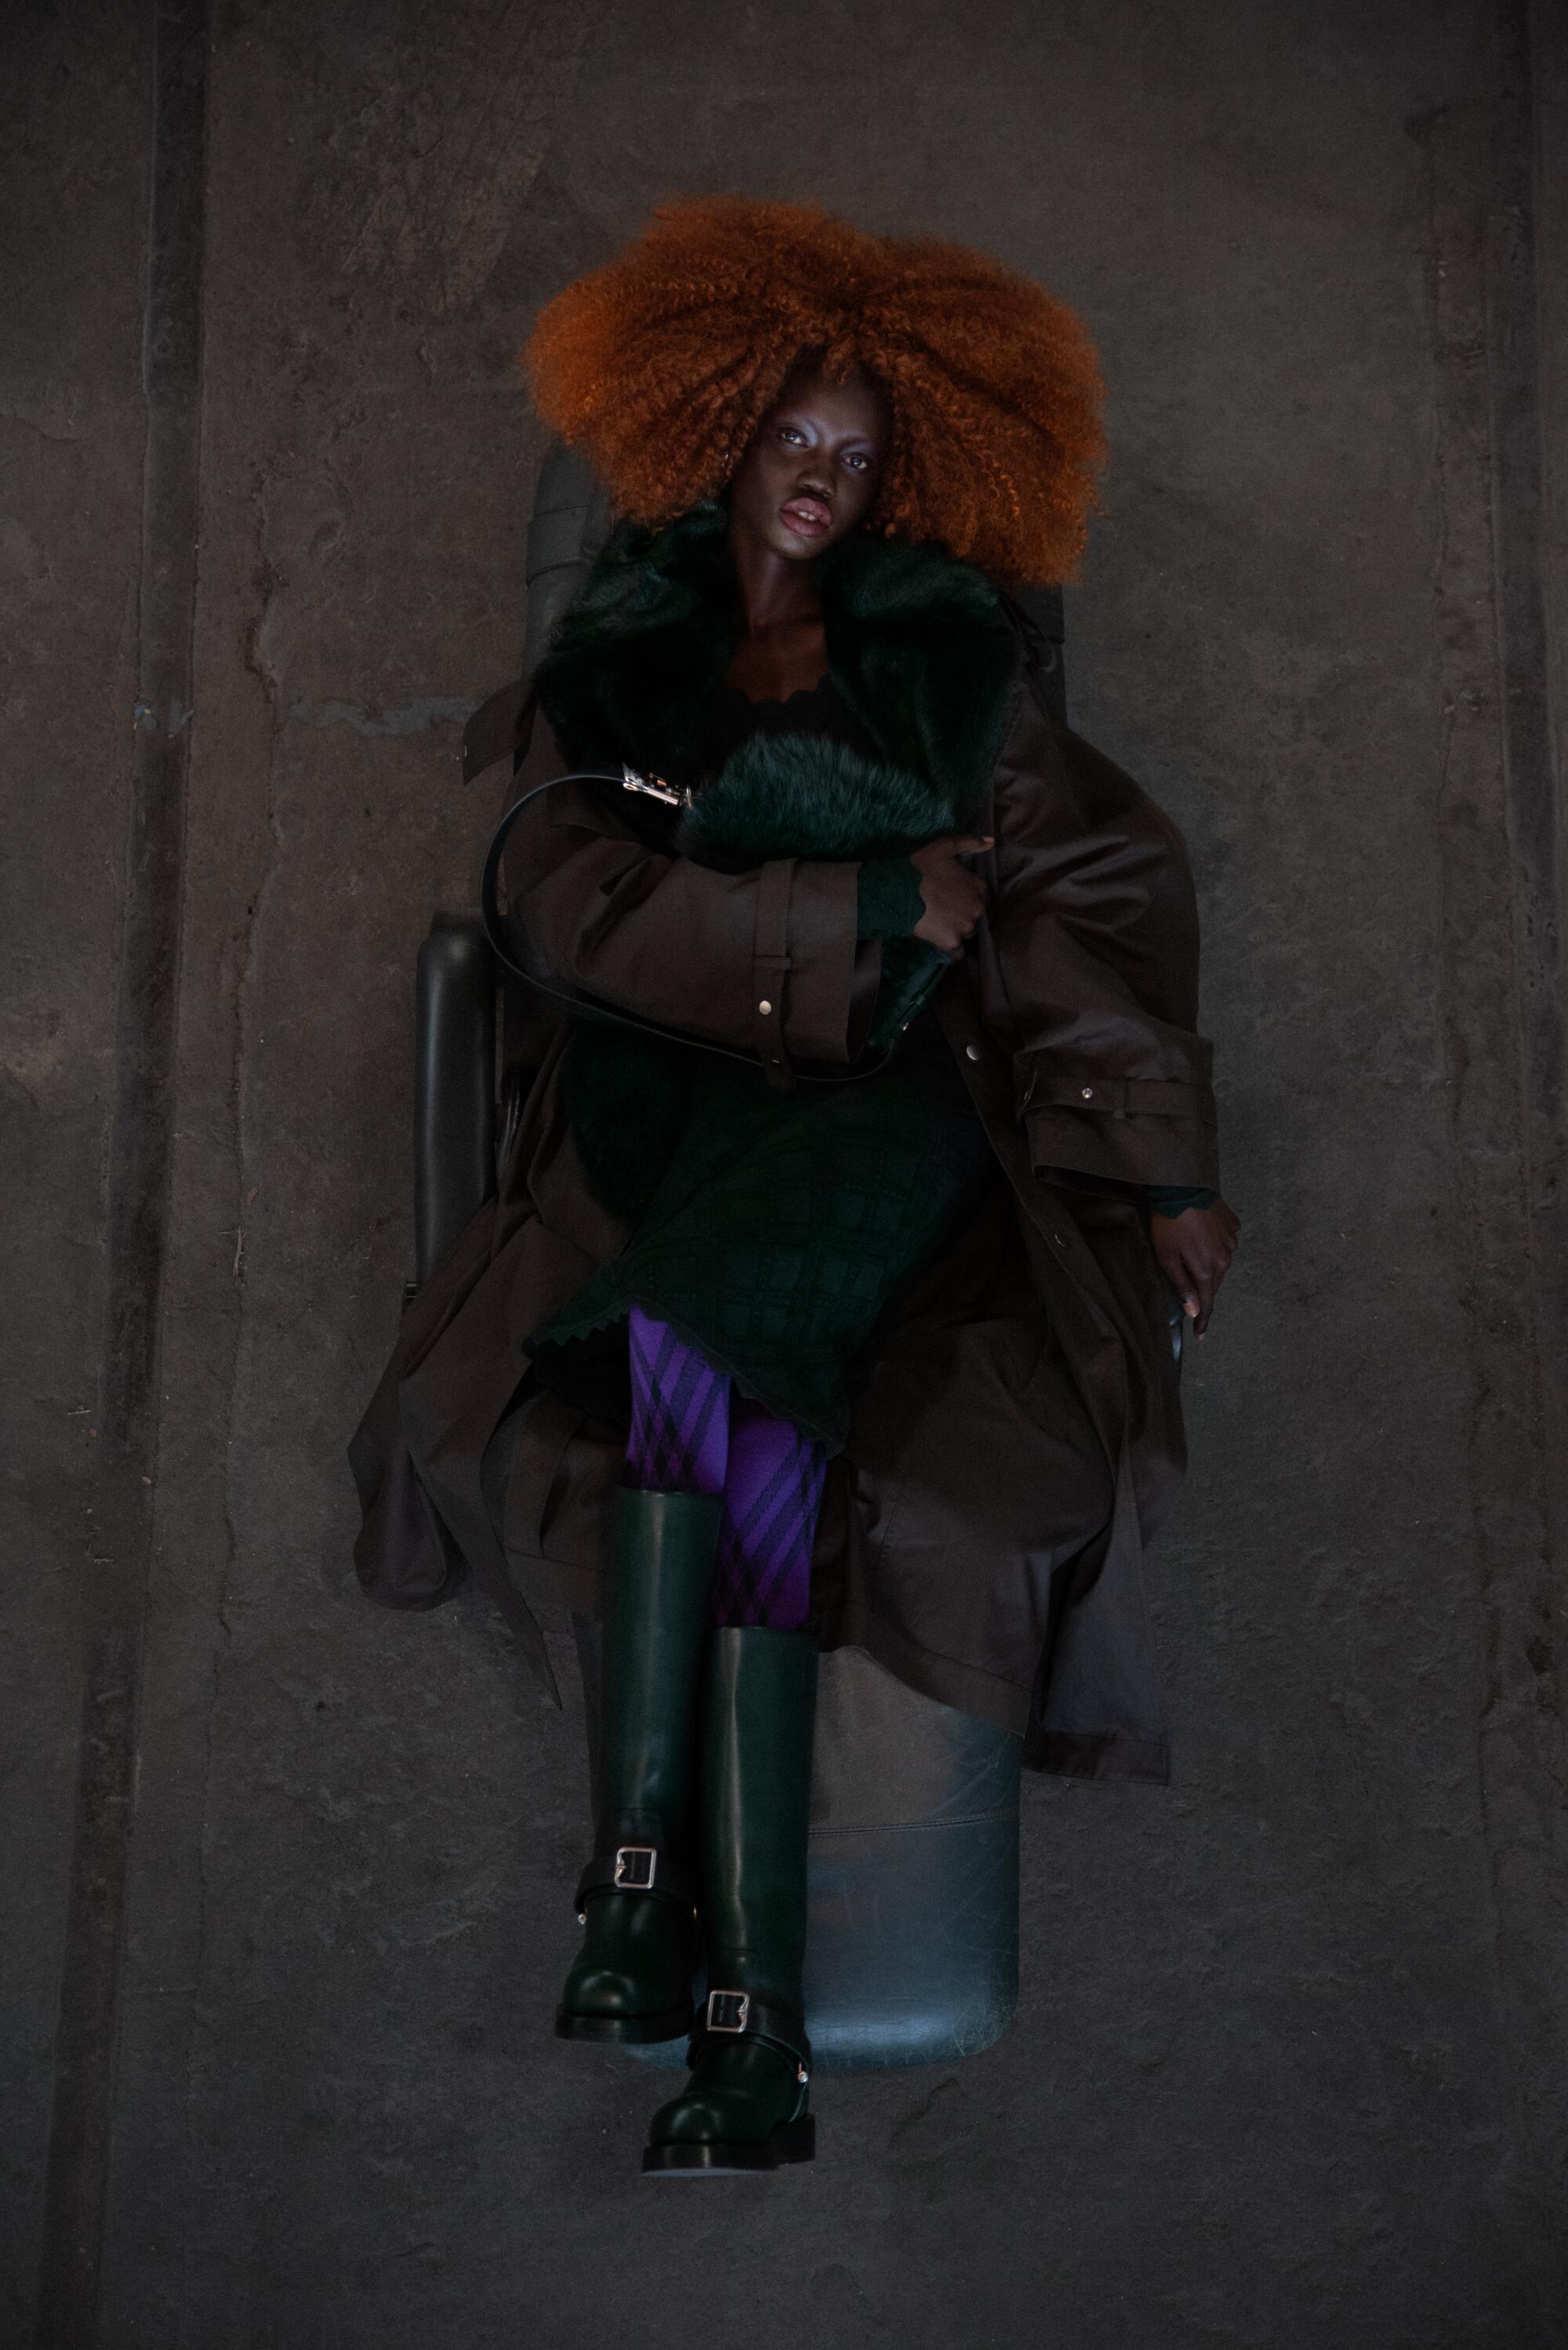 Model Aker Ajak wears Burberry Gabardine faux fur trench coat, Aran wool blend dress, leather and shearling small Knight bag